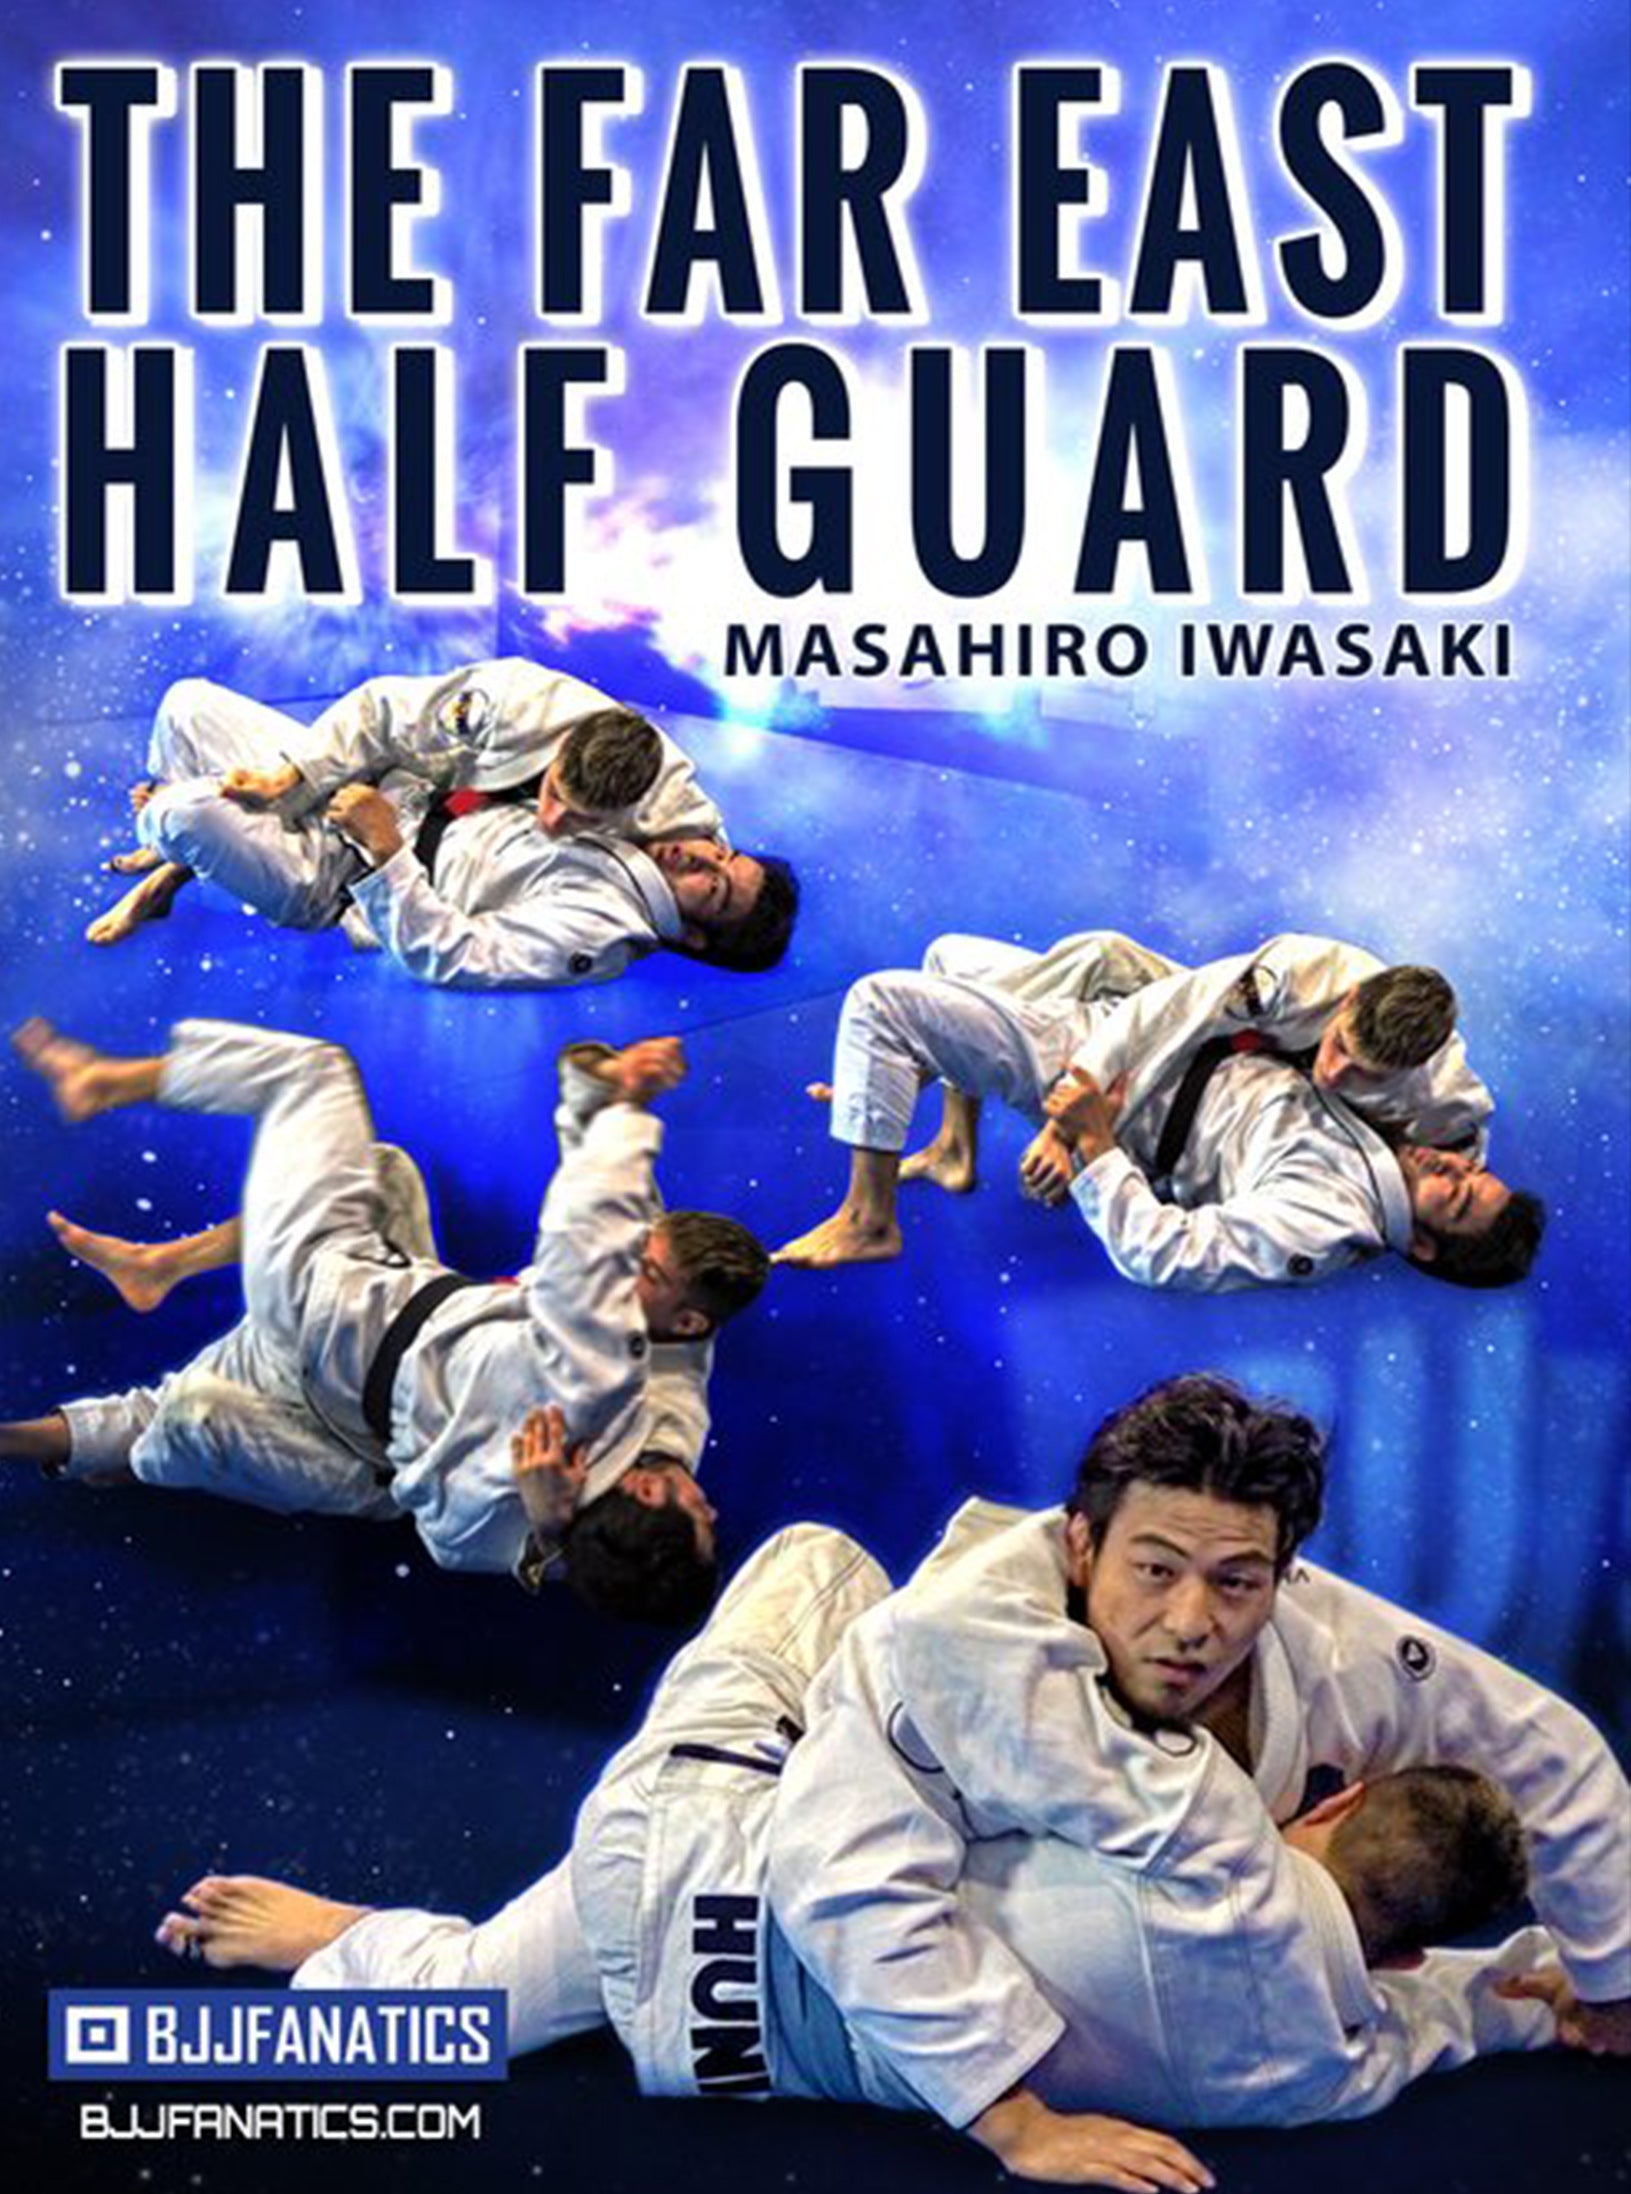 Far East Half Guard by Masahiro Iwasaki